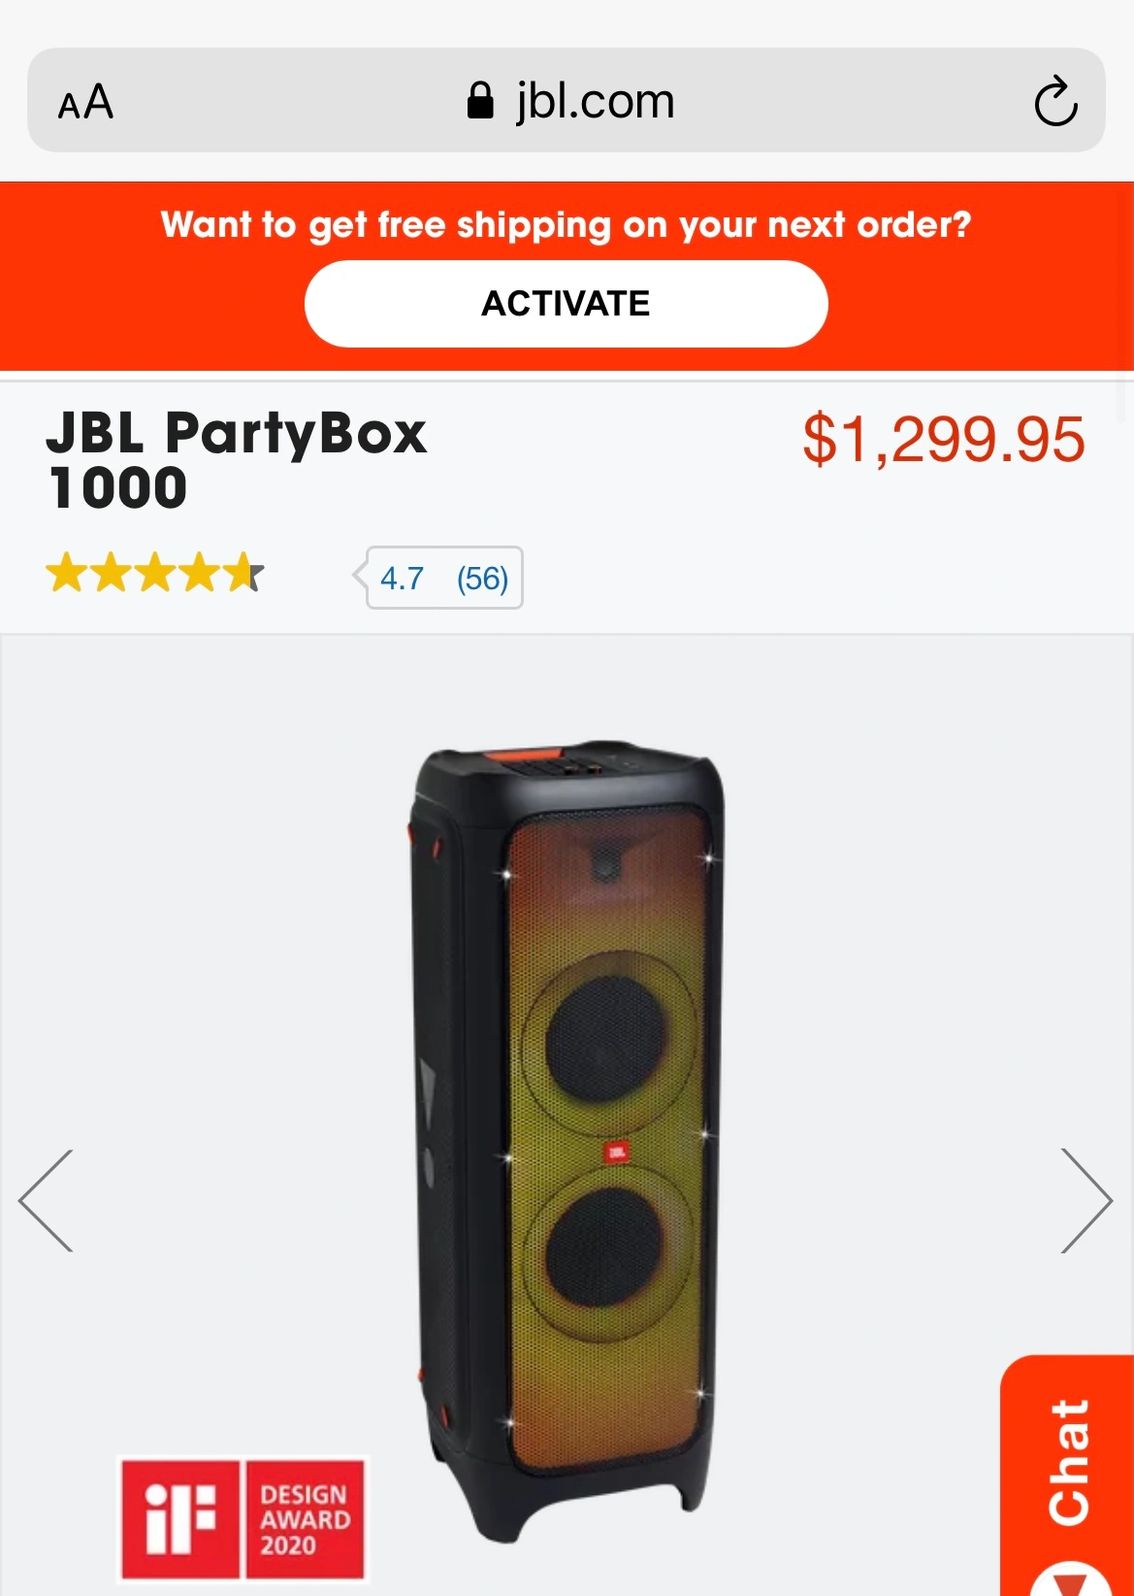 JBL PartyBox 1000 Rental